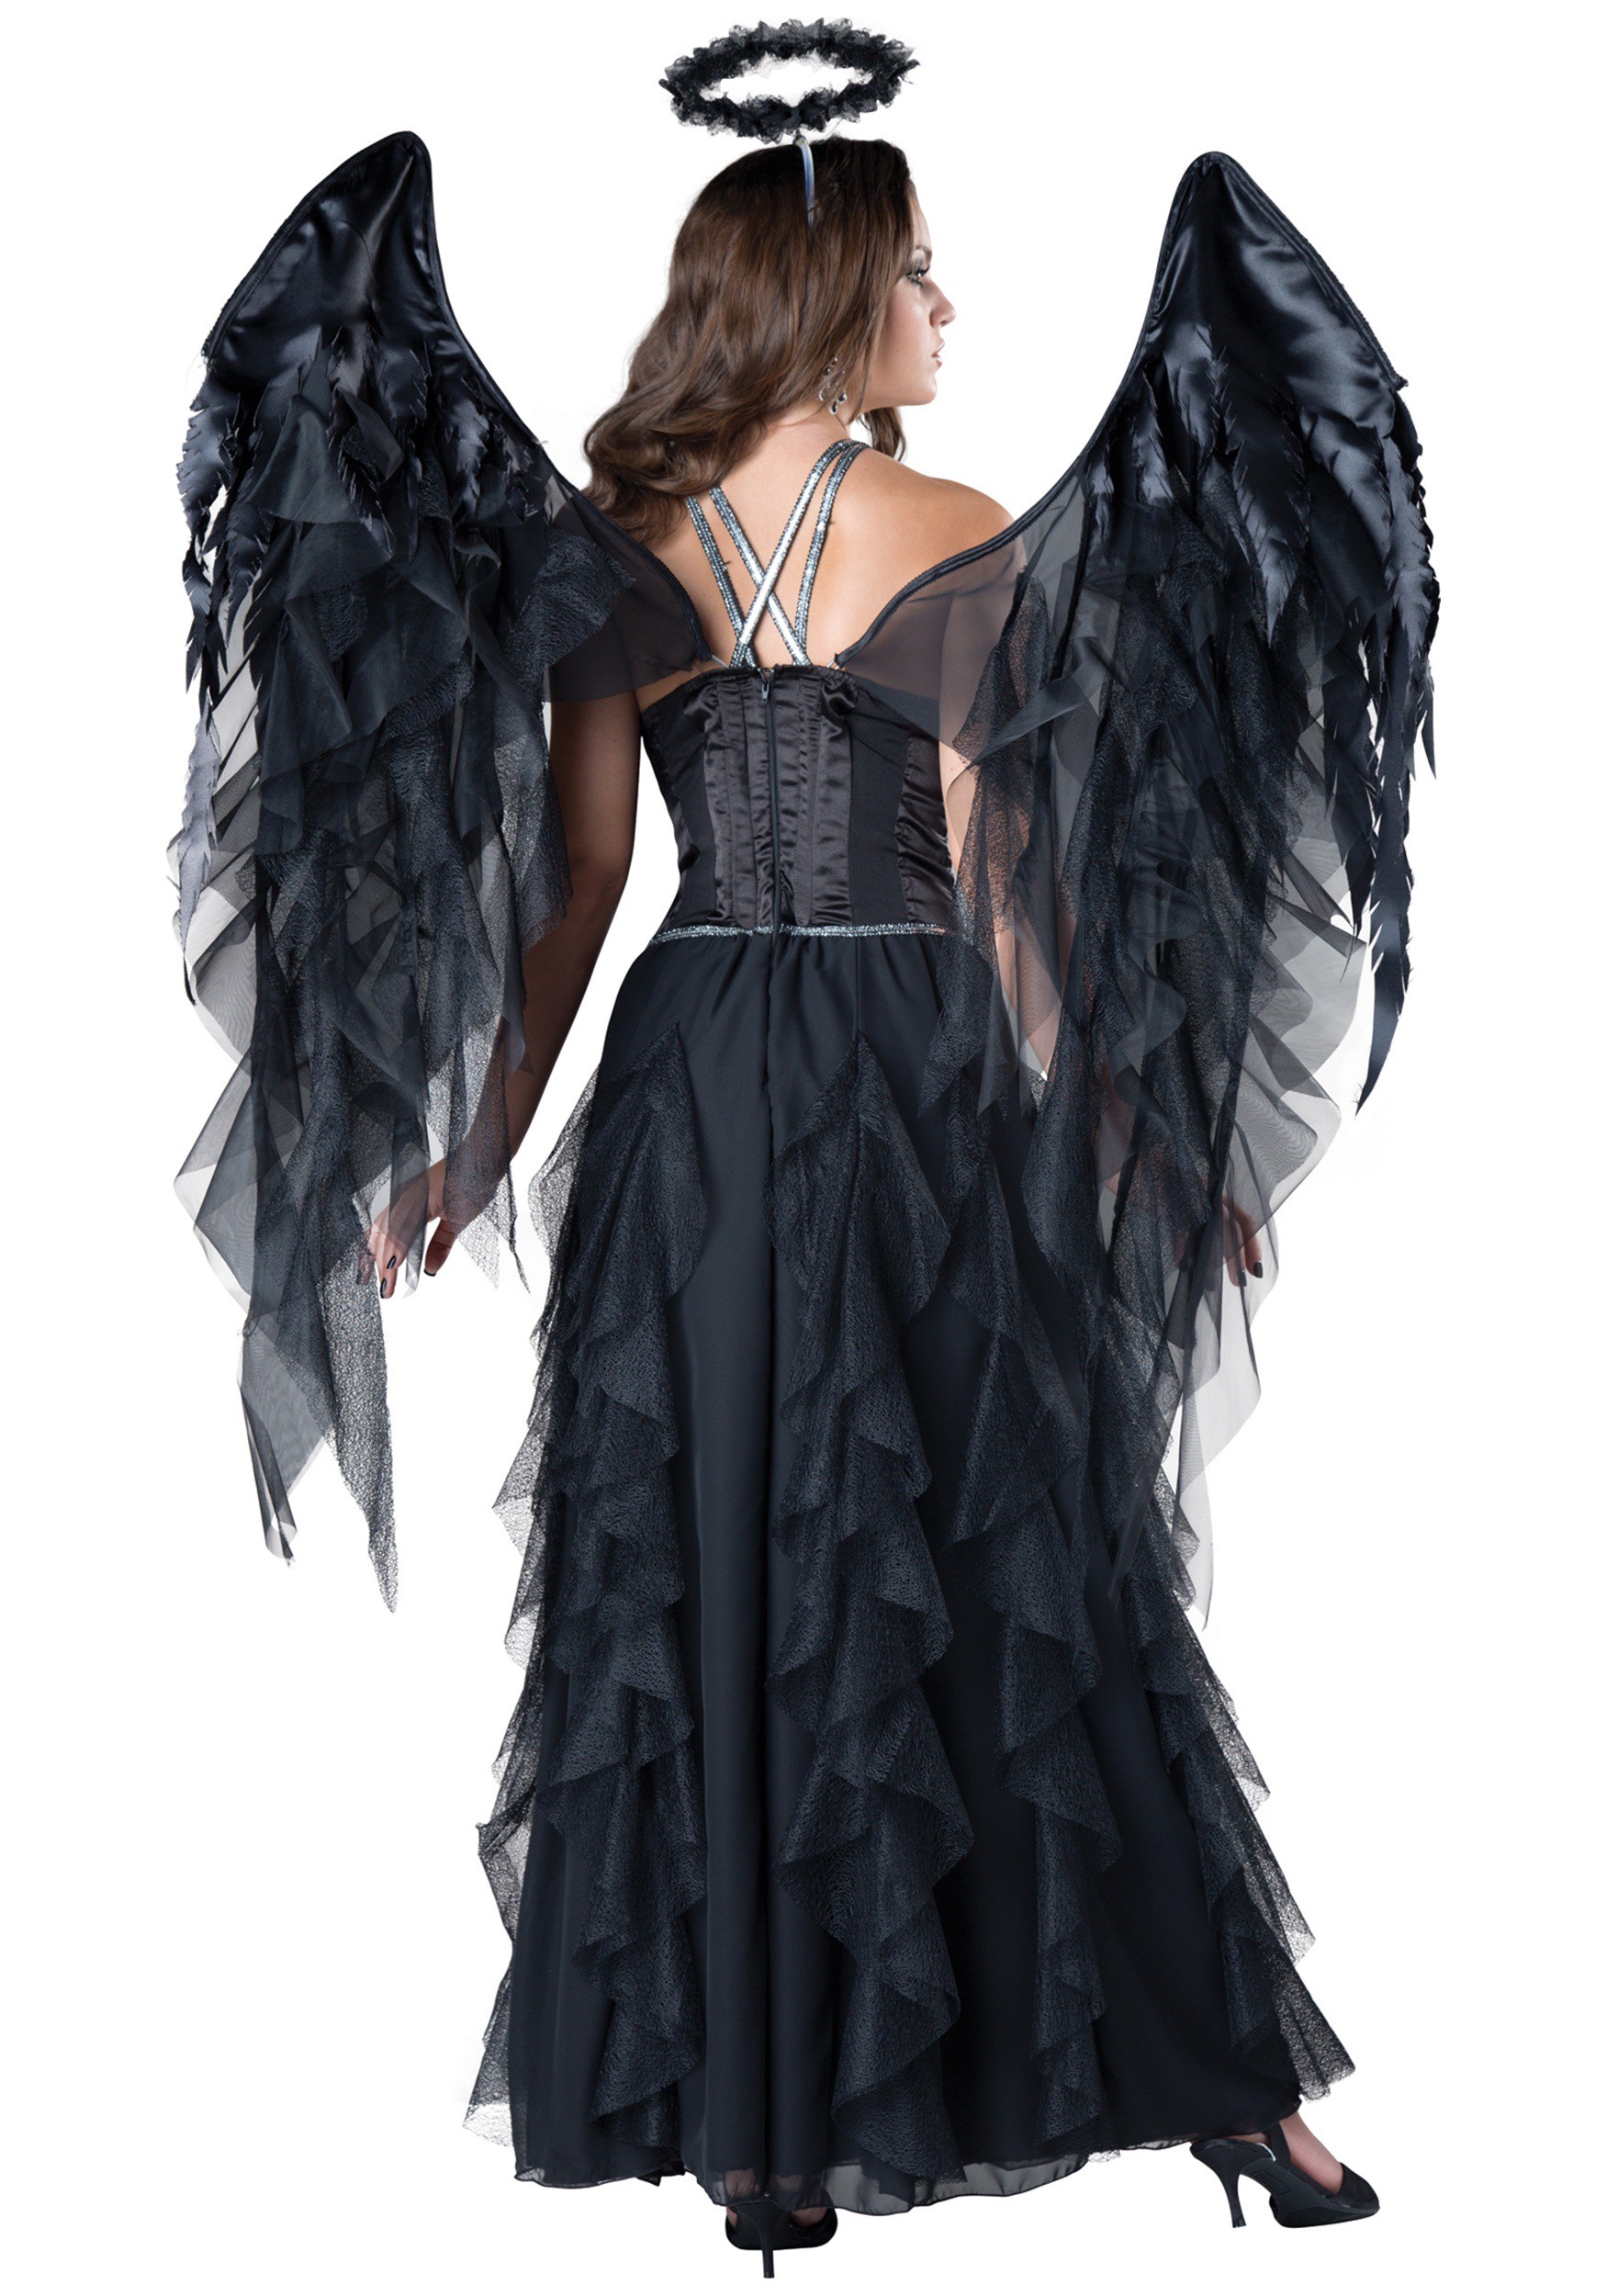 dark angel costume